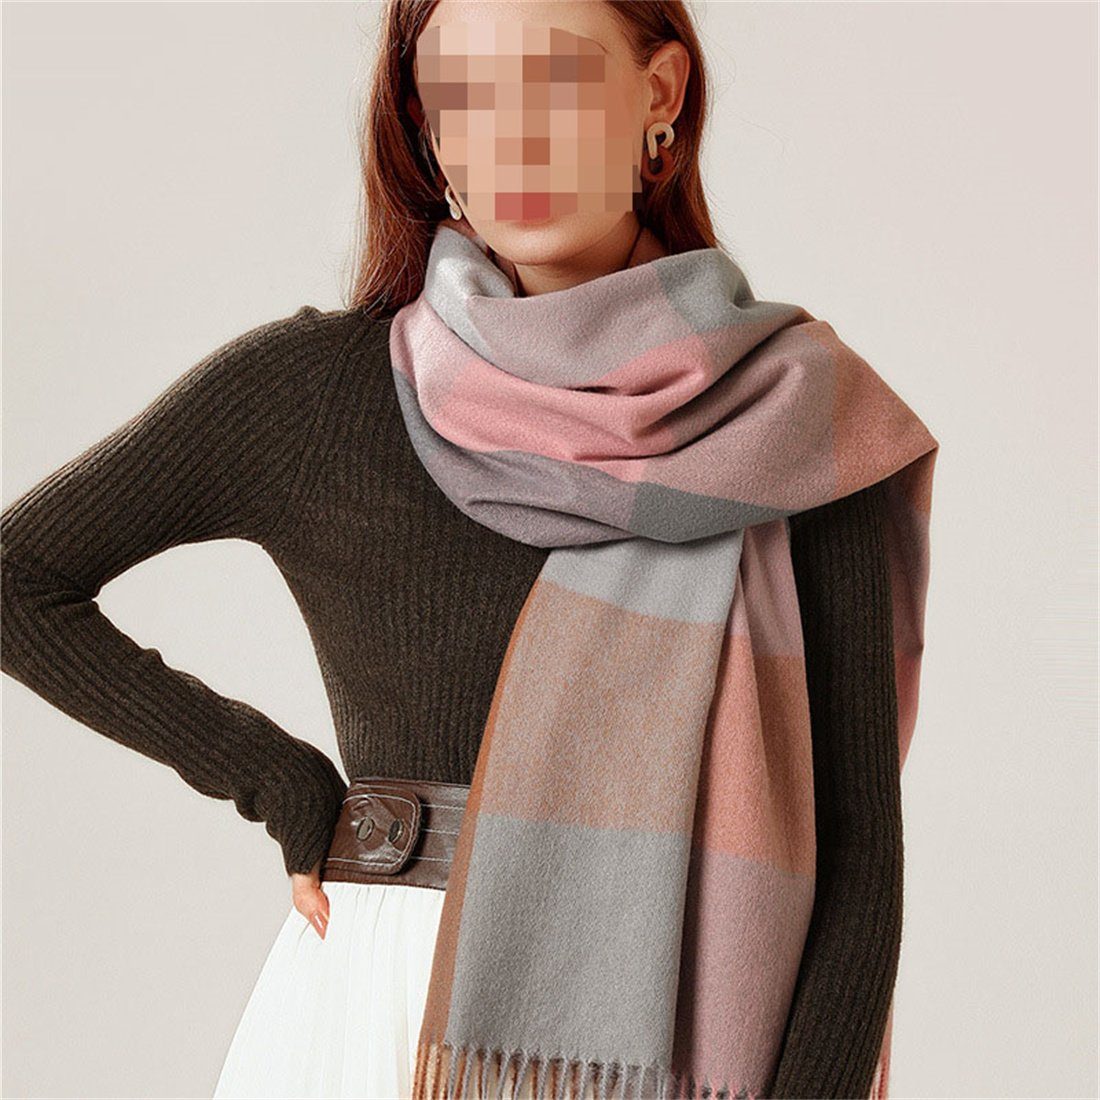 DÖRÖY Modeschal Damen Winter Vintage Warm Schal gestreiften quadratischen Schal, Beige